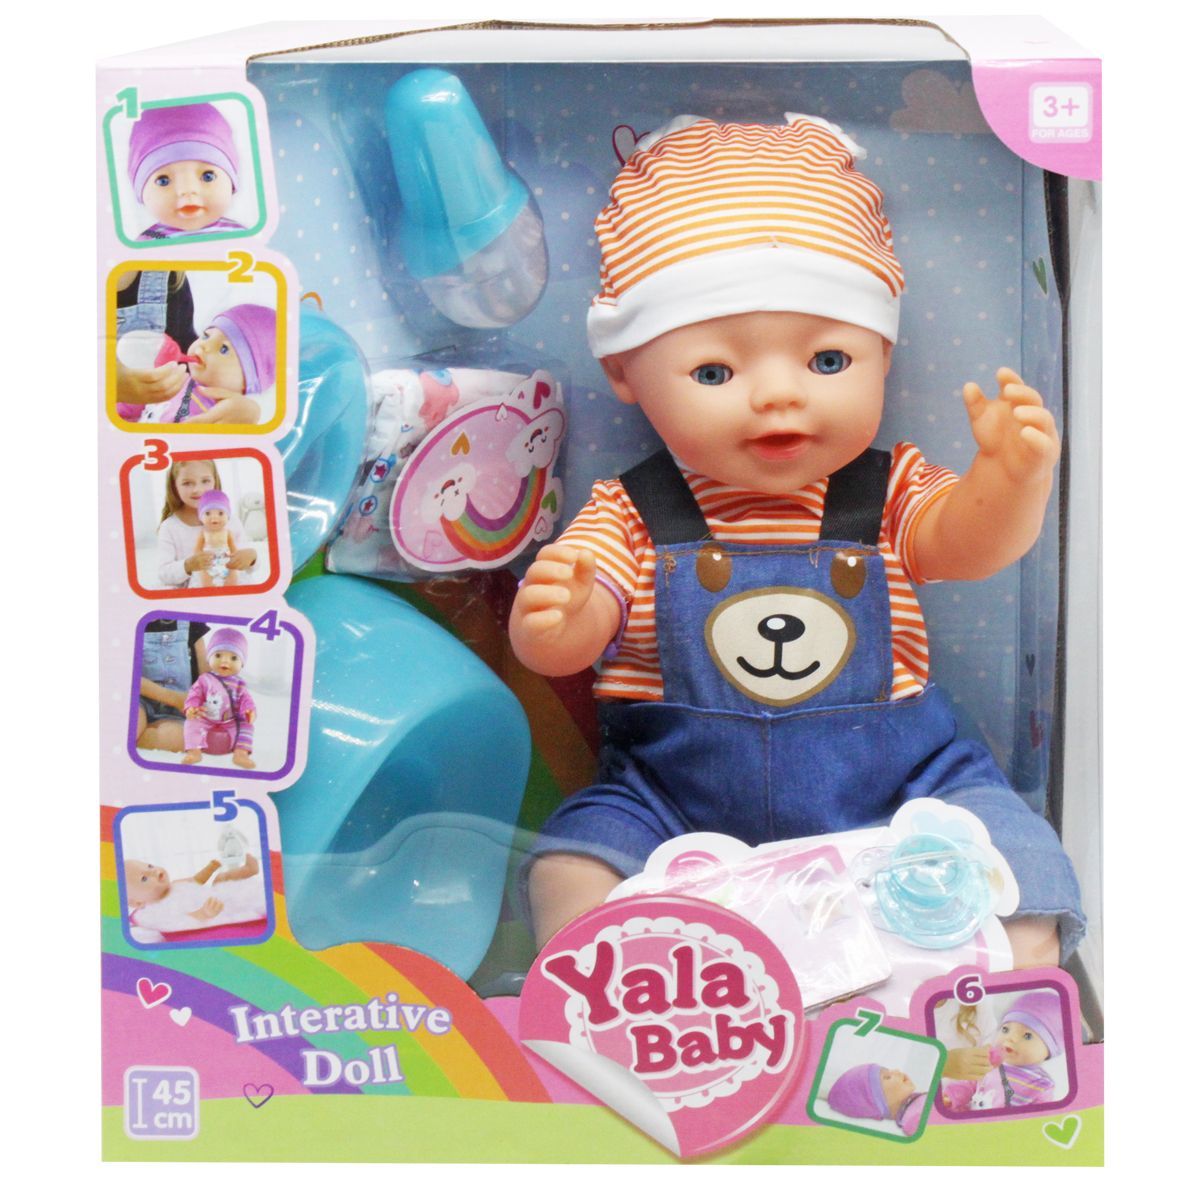 Уценка.  Интерактивный пупс "Yala Baby"  - порвана коробка